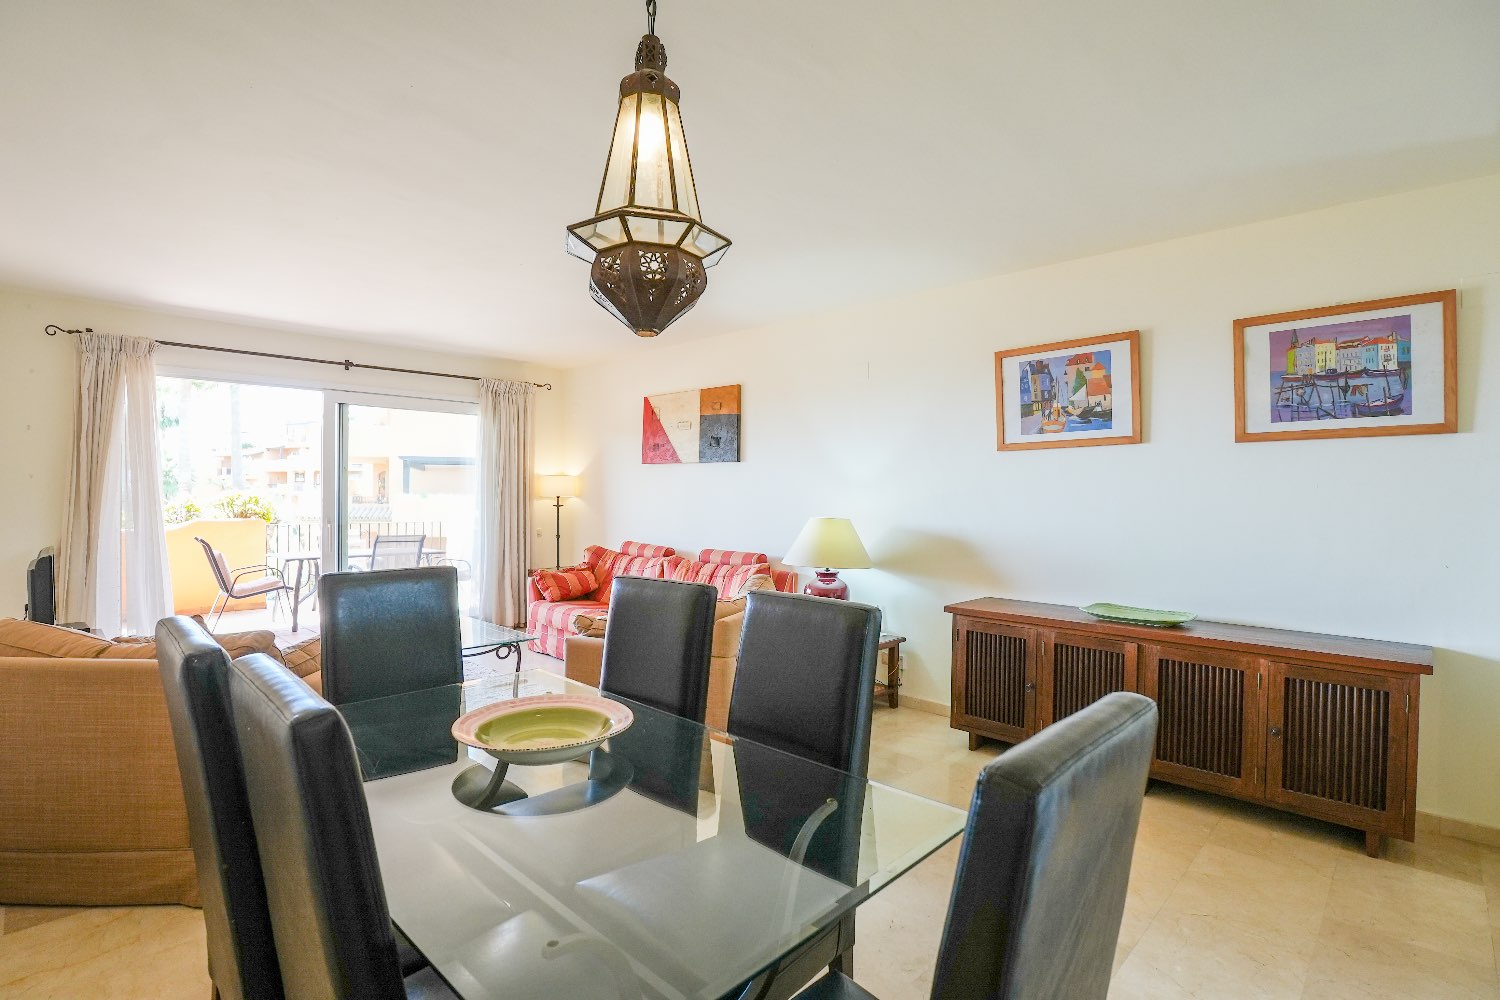 Fabulous corner apartment in Los Granados de la Duquesa - Manilva - Malaga - Costa del Sol